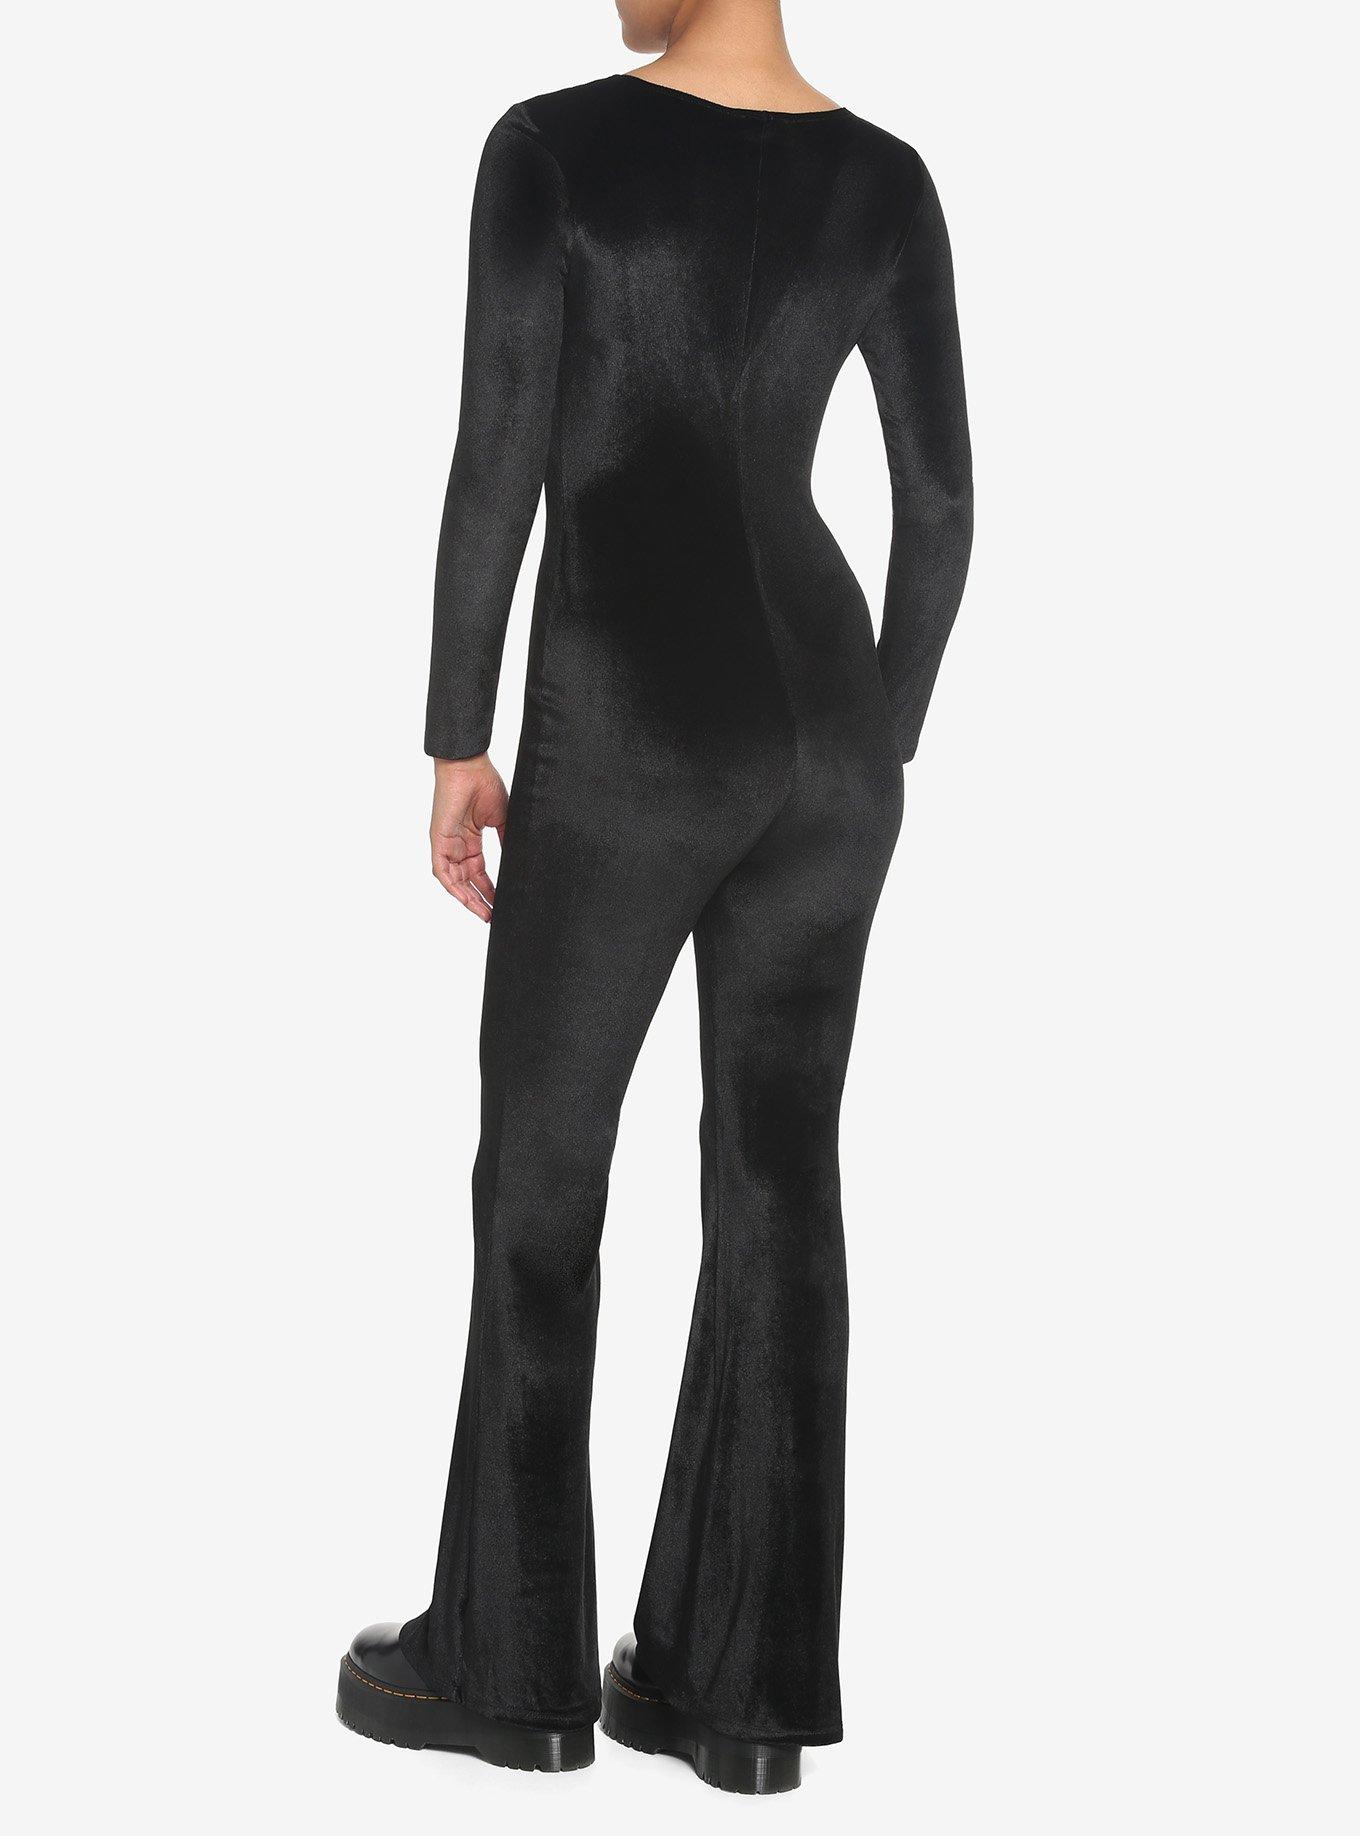 Black Velvet Lace-Up Jumpsuit, BLACK, alternate